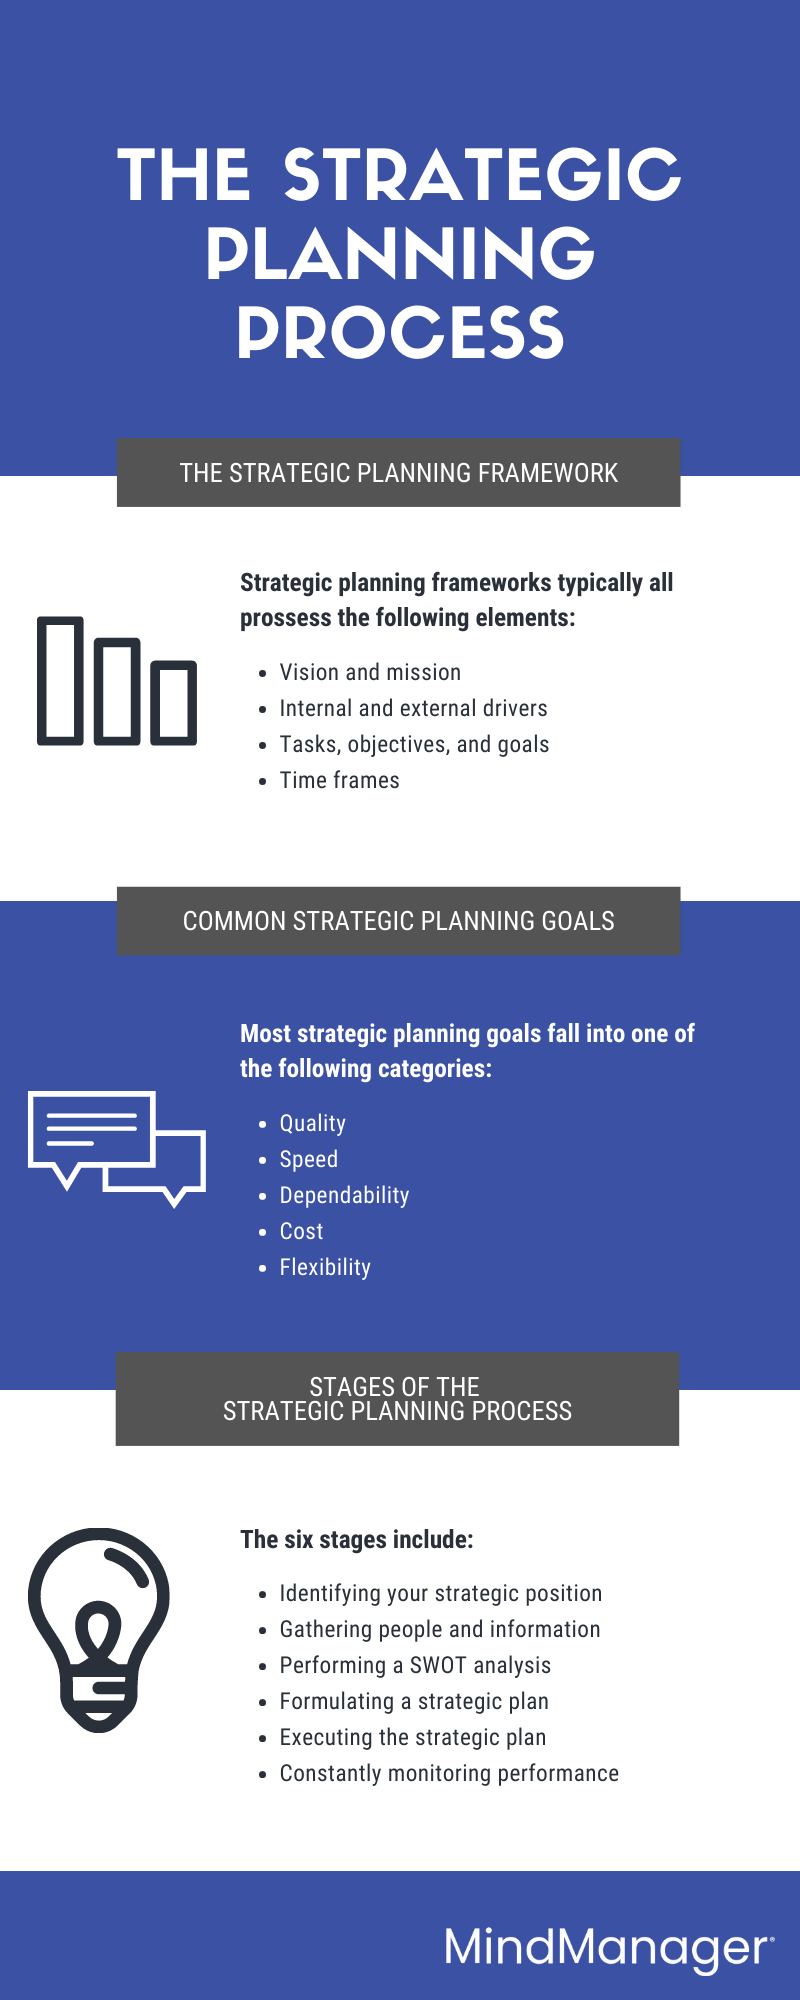 The strategic planning process | MindManager Blog